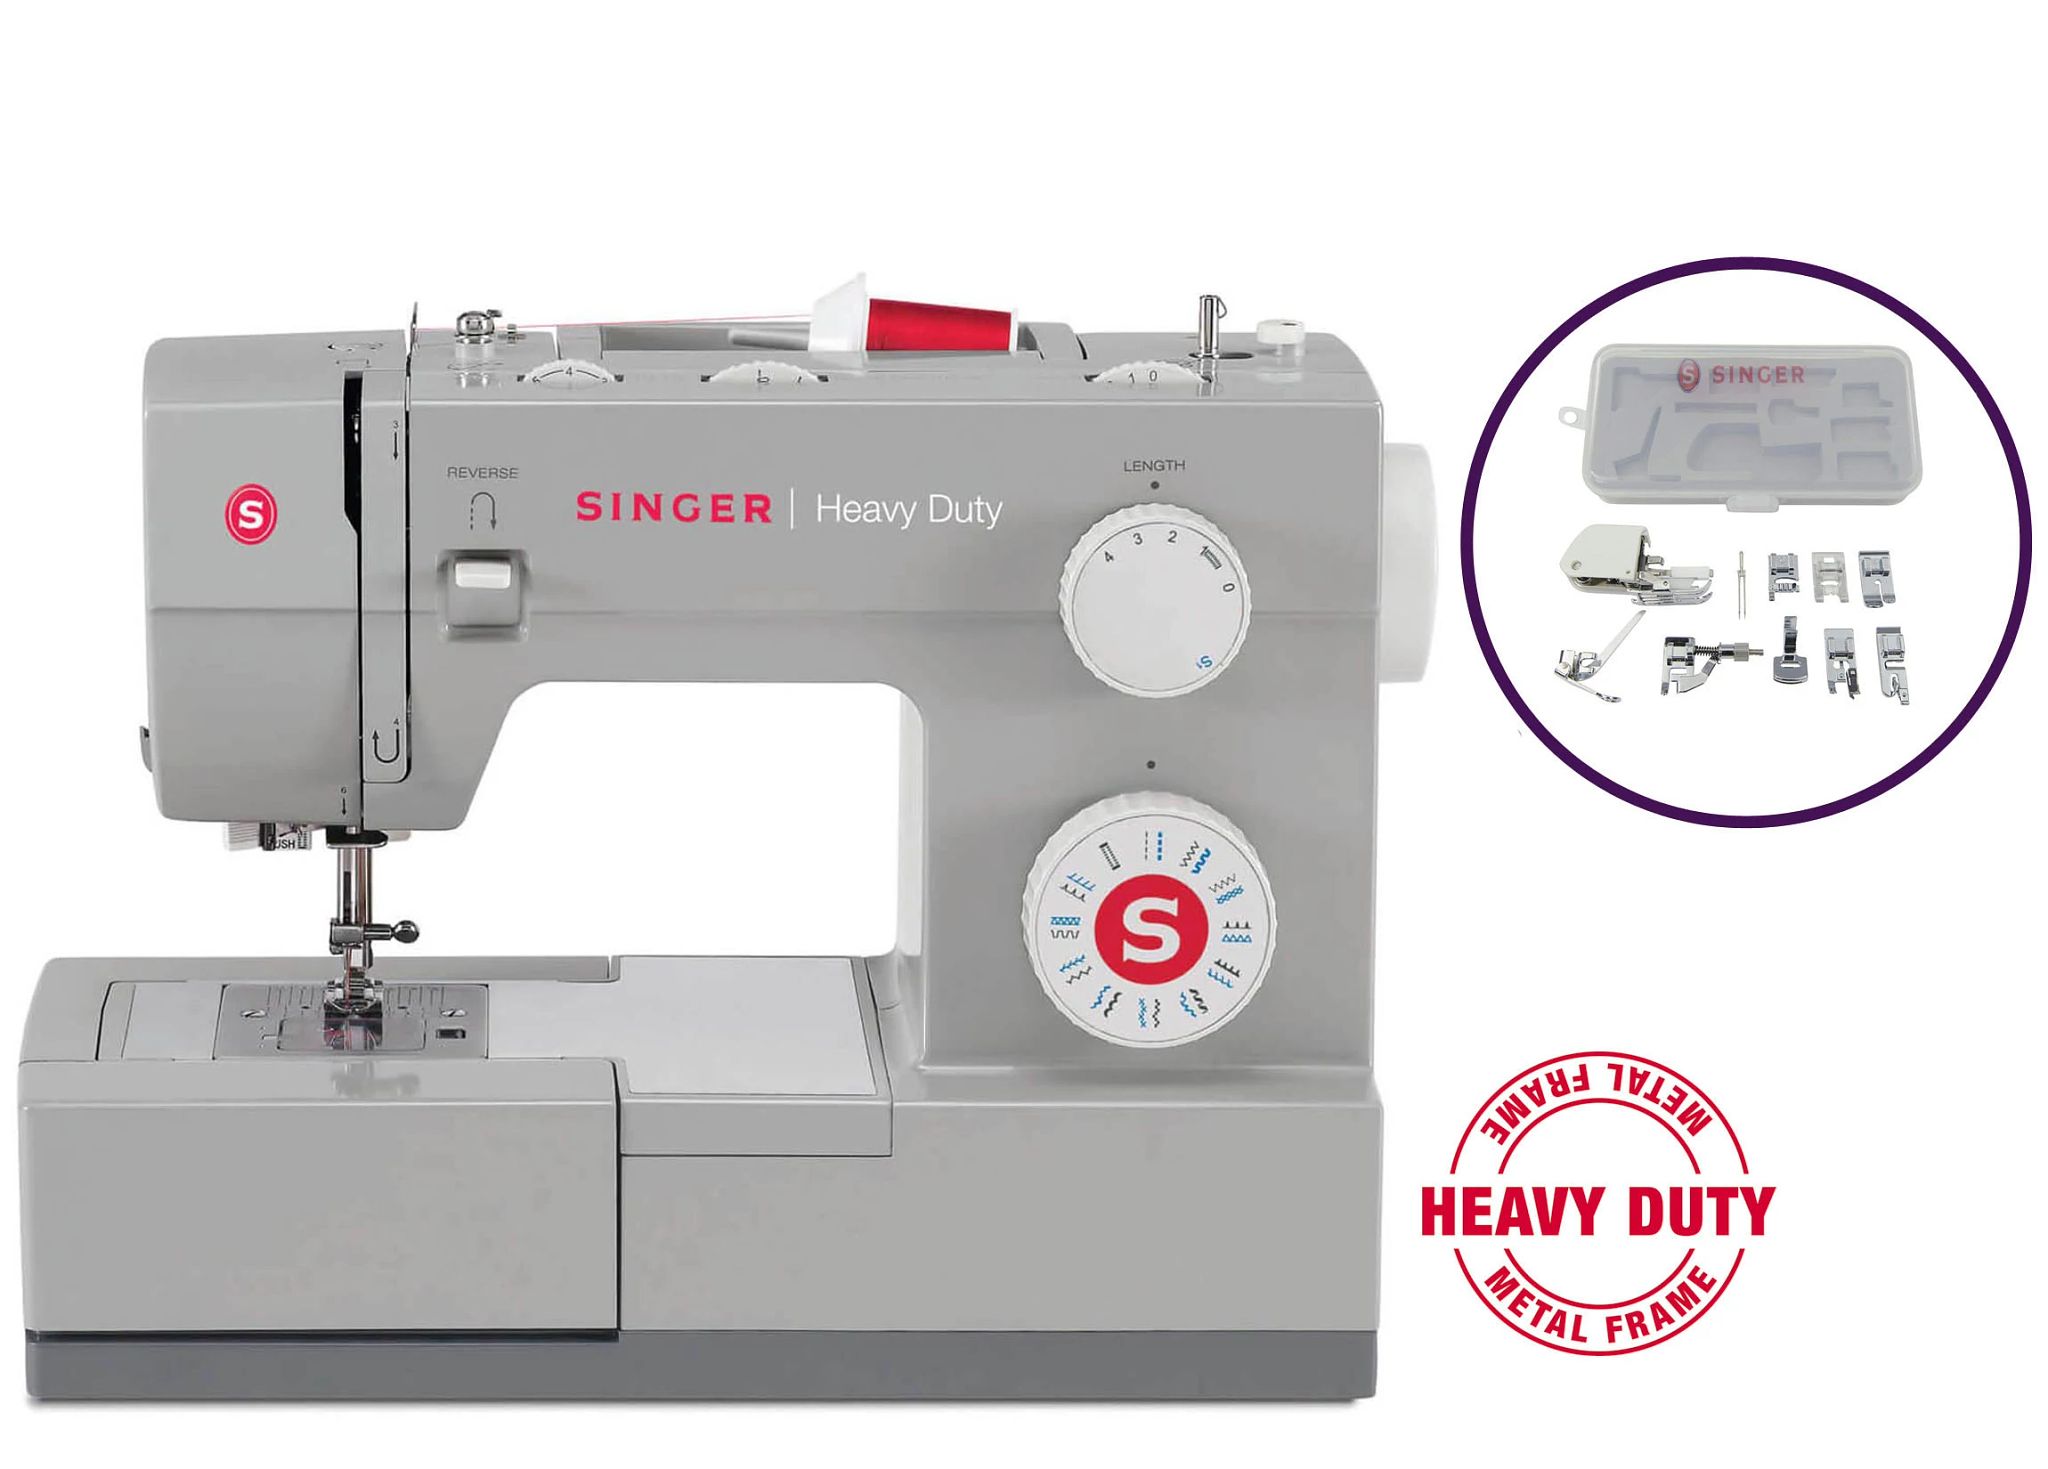 How to Thread a Singer Heavy Duty Sewing Machine - Super Crafty Gal